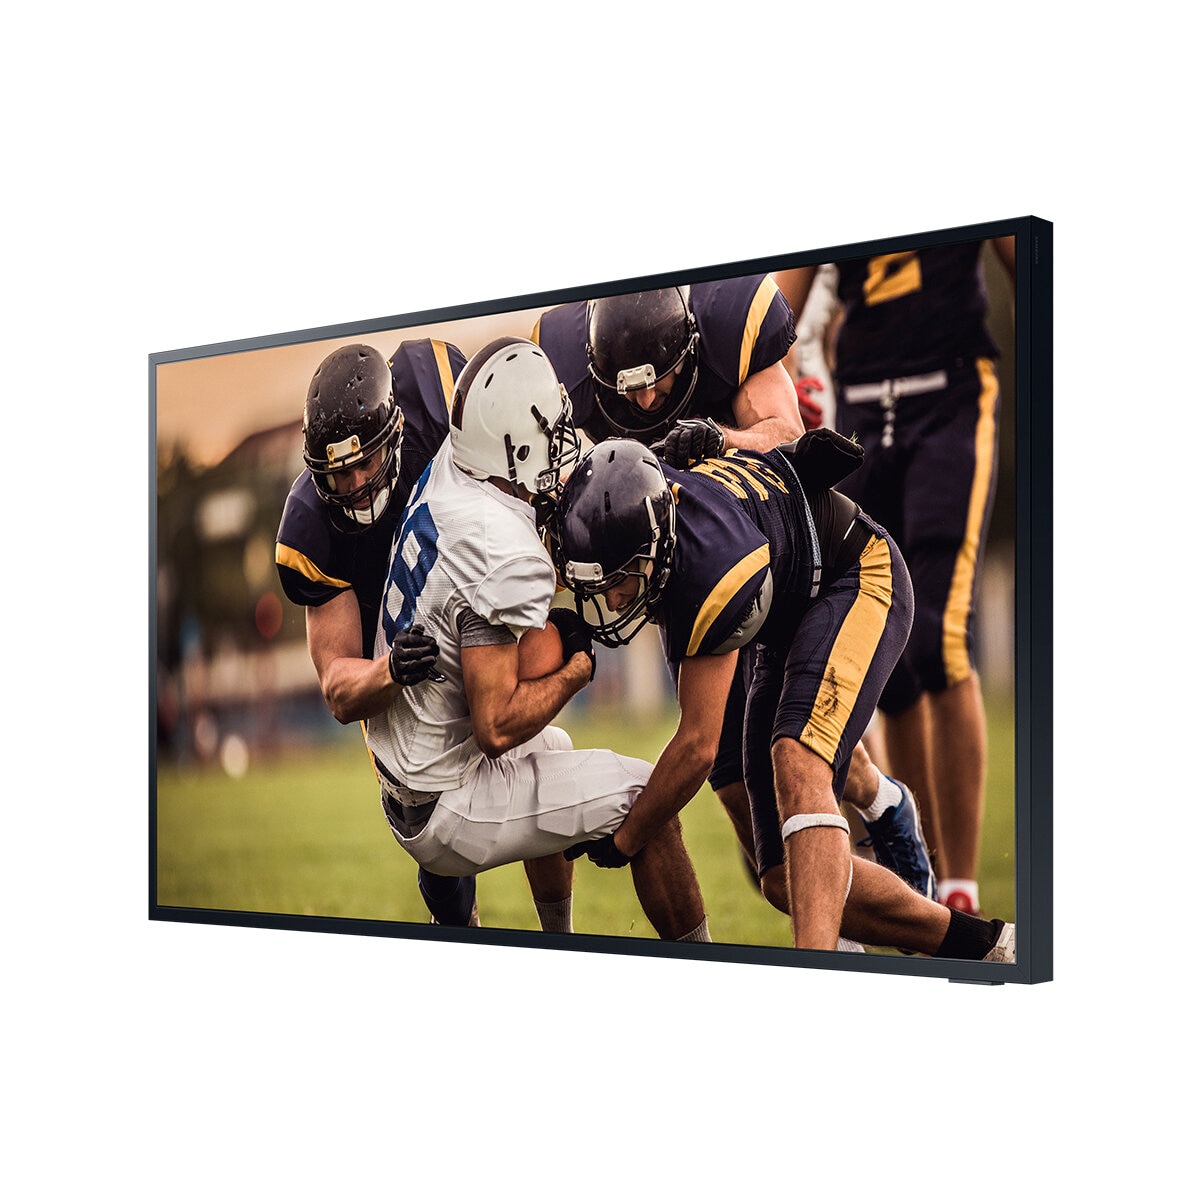 Samsung Pantalla 65" QLED TERRACE 4K Smart TV para exteriores